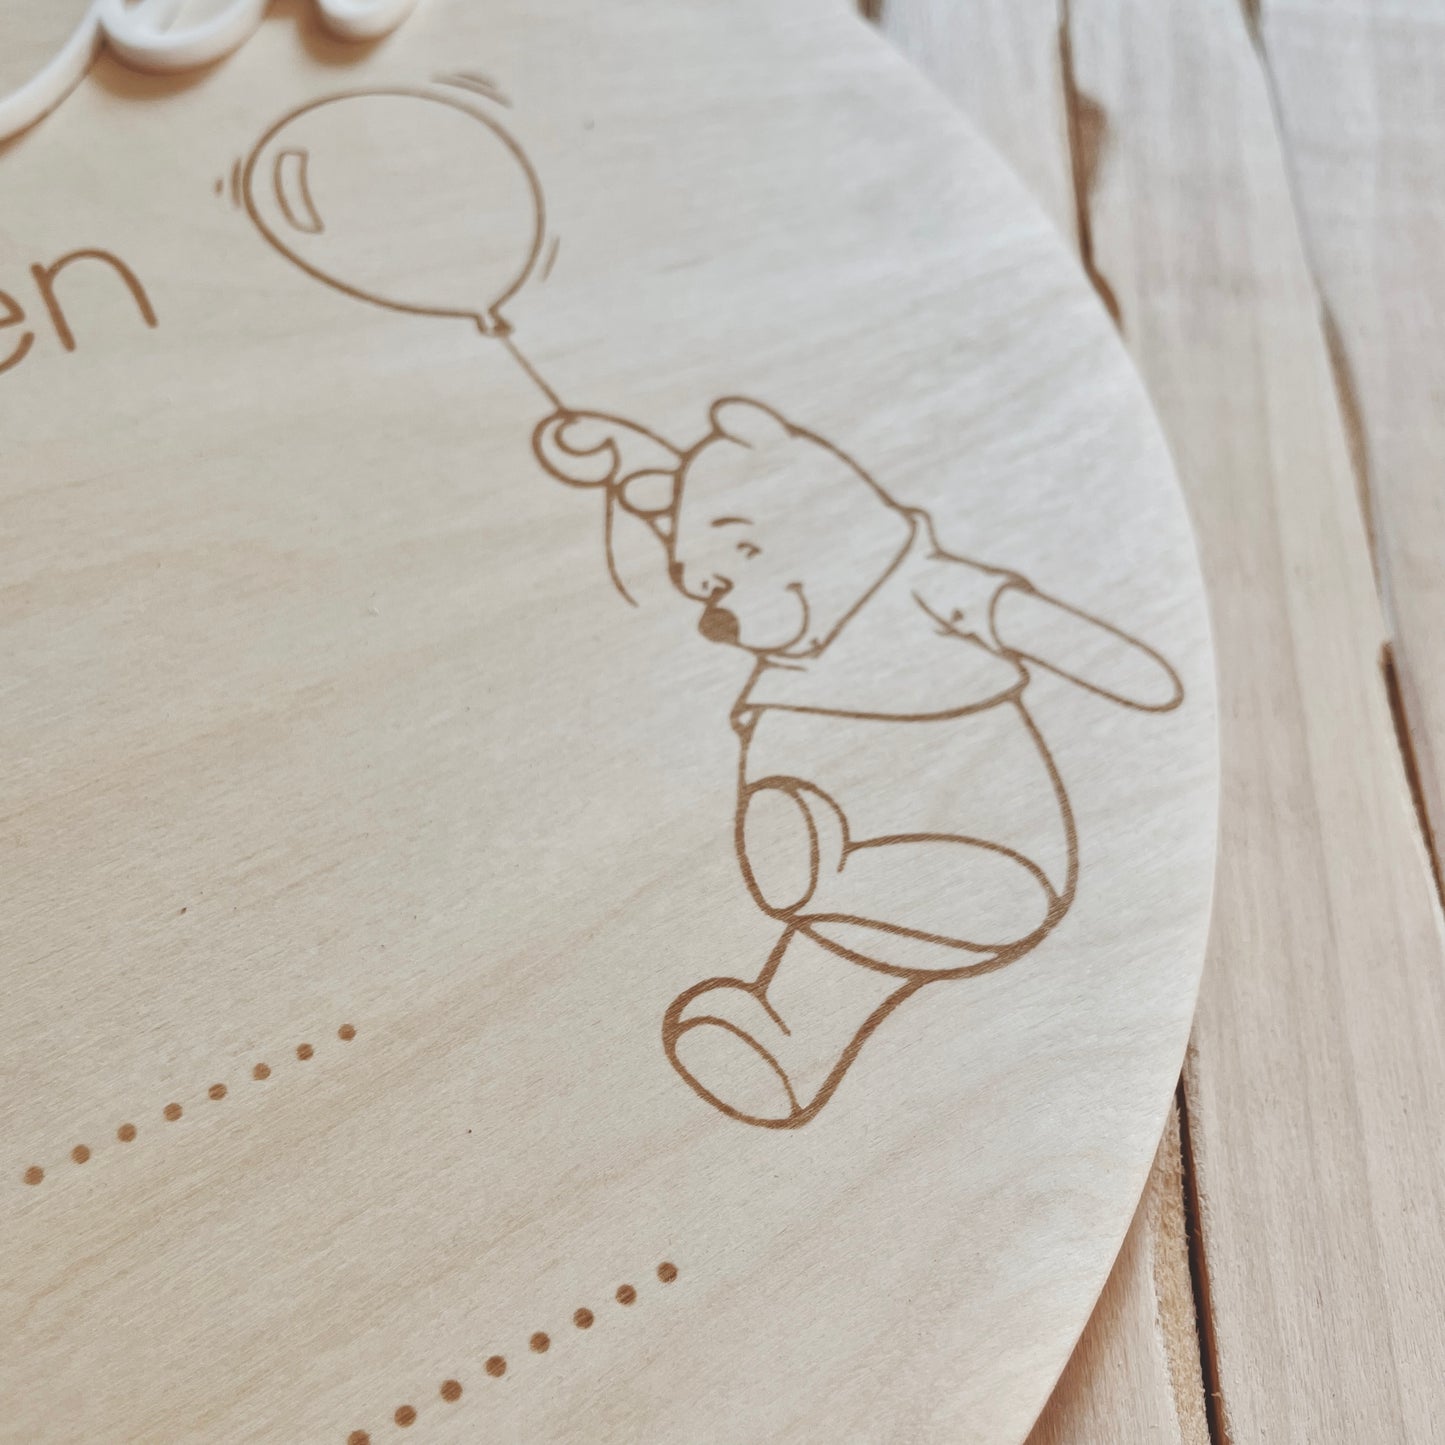 Custom baby arrival announcement sign - Pooh Bear